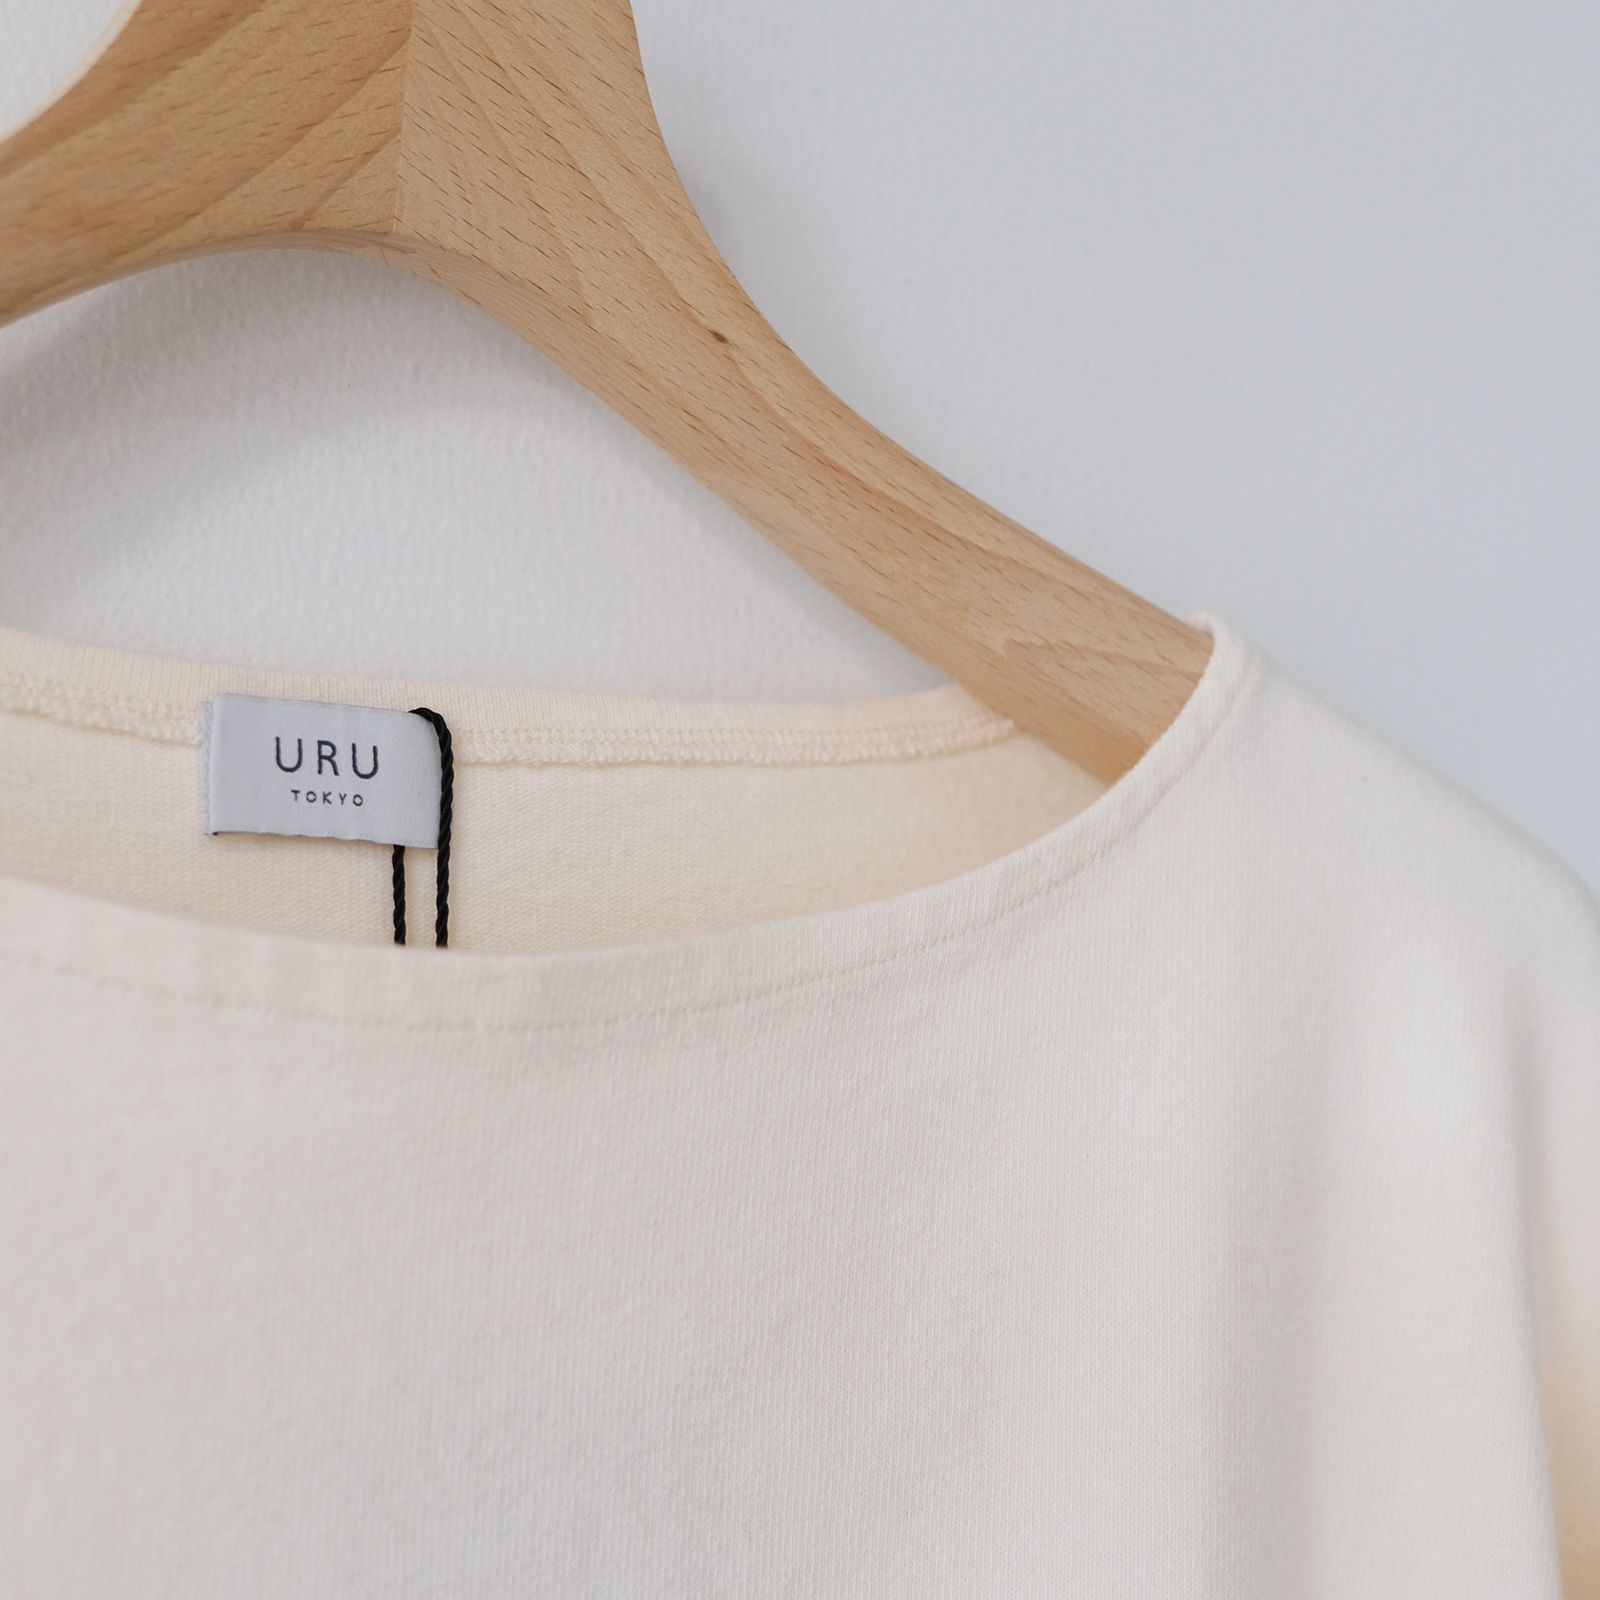 URU - Long Sleeve Tee -Tシャツ-（Natural / ナチュラル） | STACK STORE